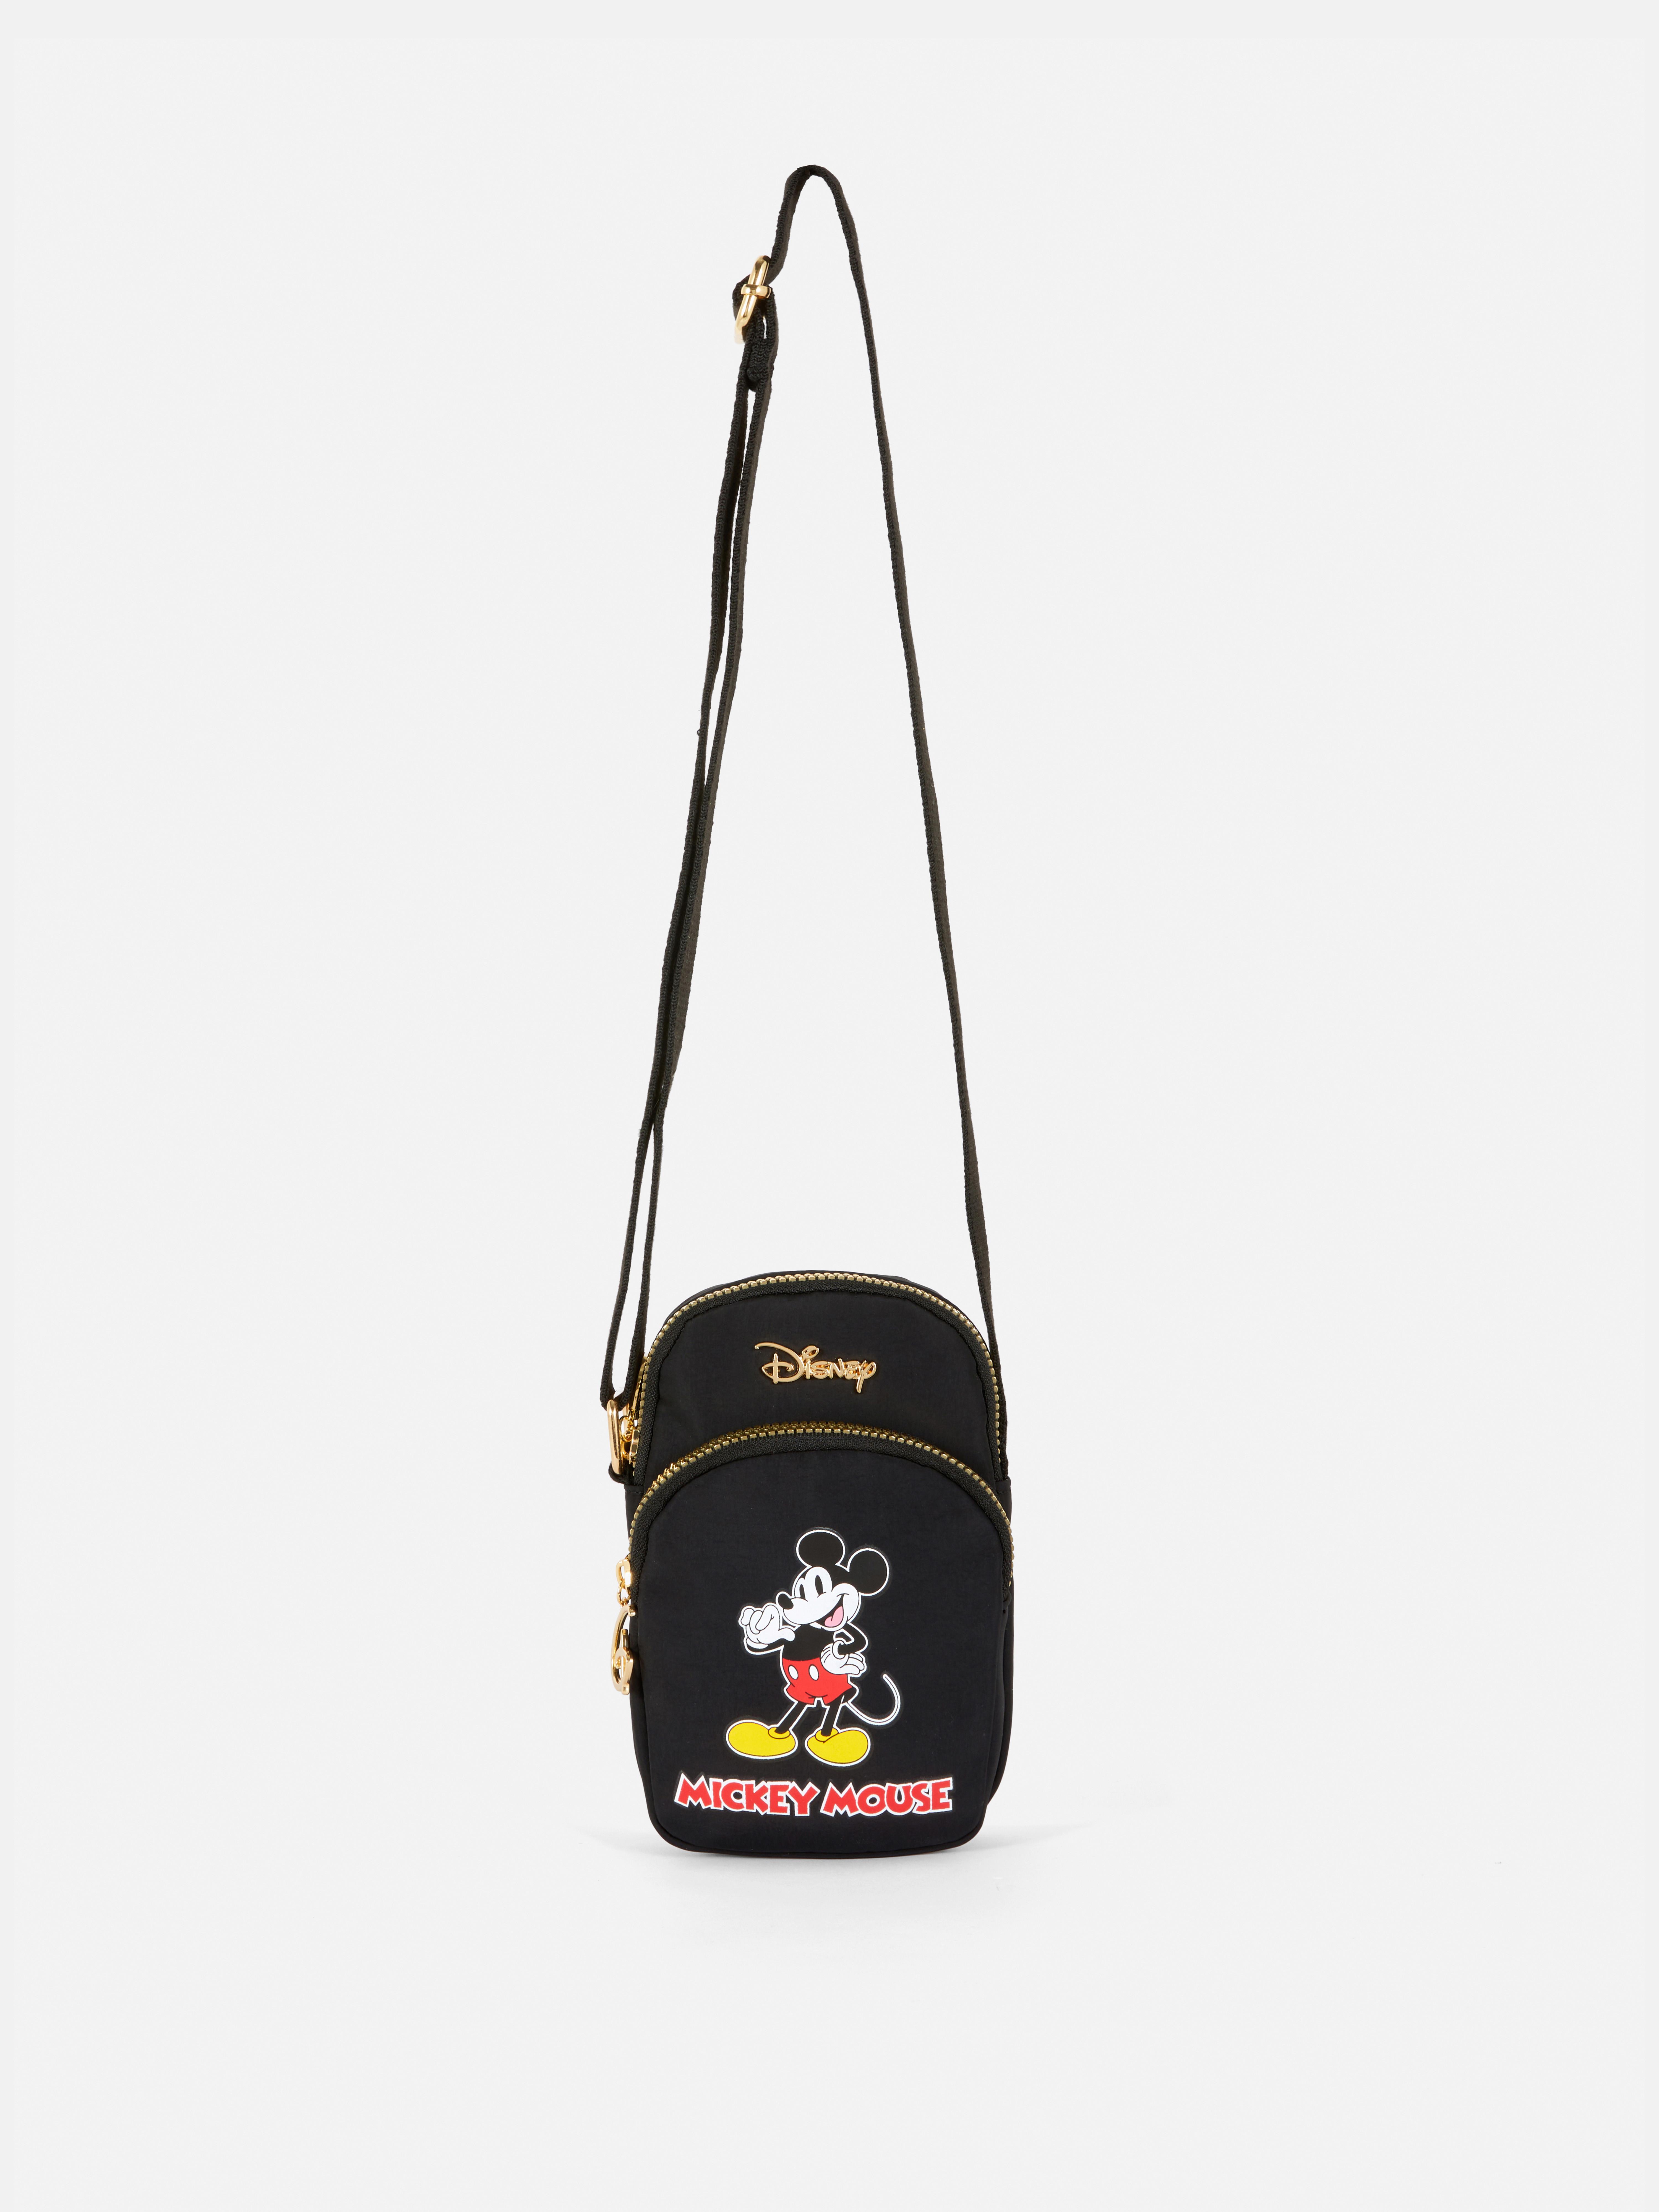 Disney’s Mickey Mouse Printed Phone Bag